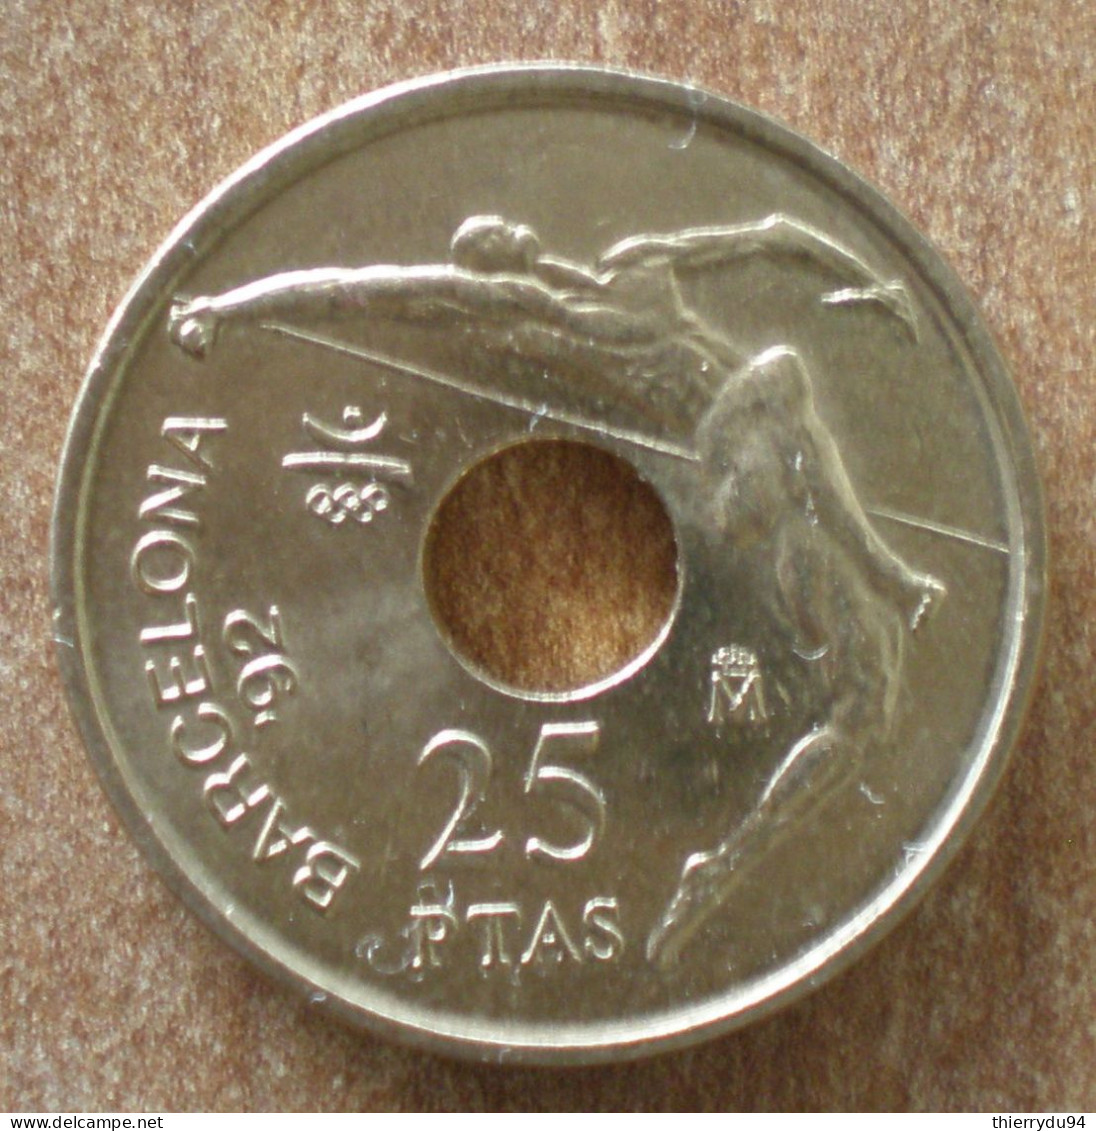 Espagne 25 Pesetas 1990 Carlos Commemo Jeux Olympique 1992 Argent Que Prix + Port Coin Paypal Crypto OK - 25 Pesetas